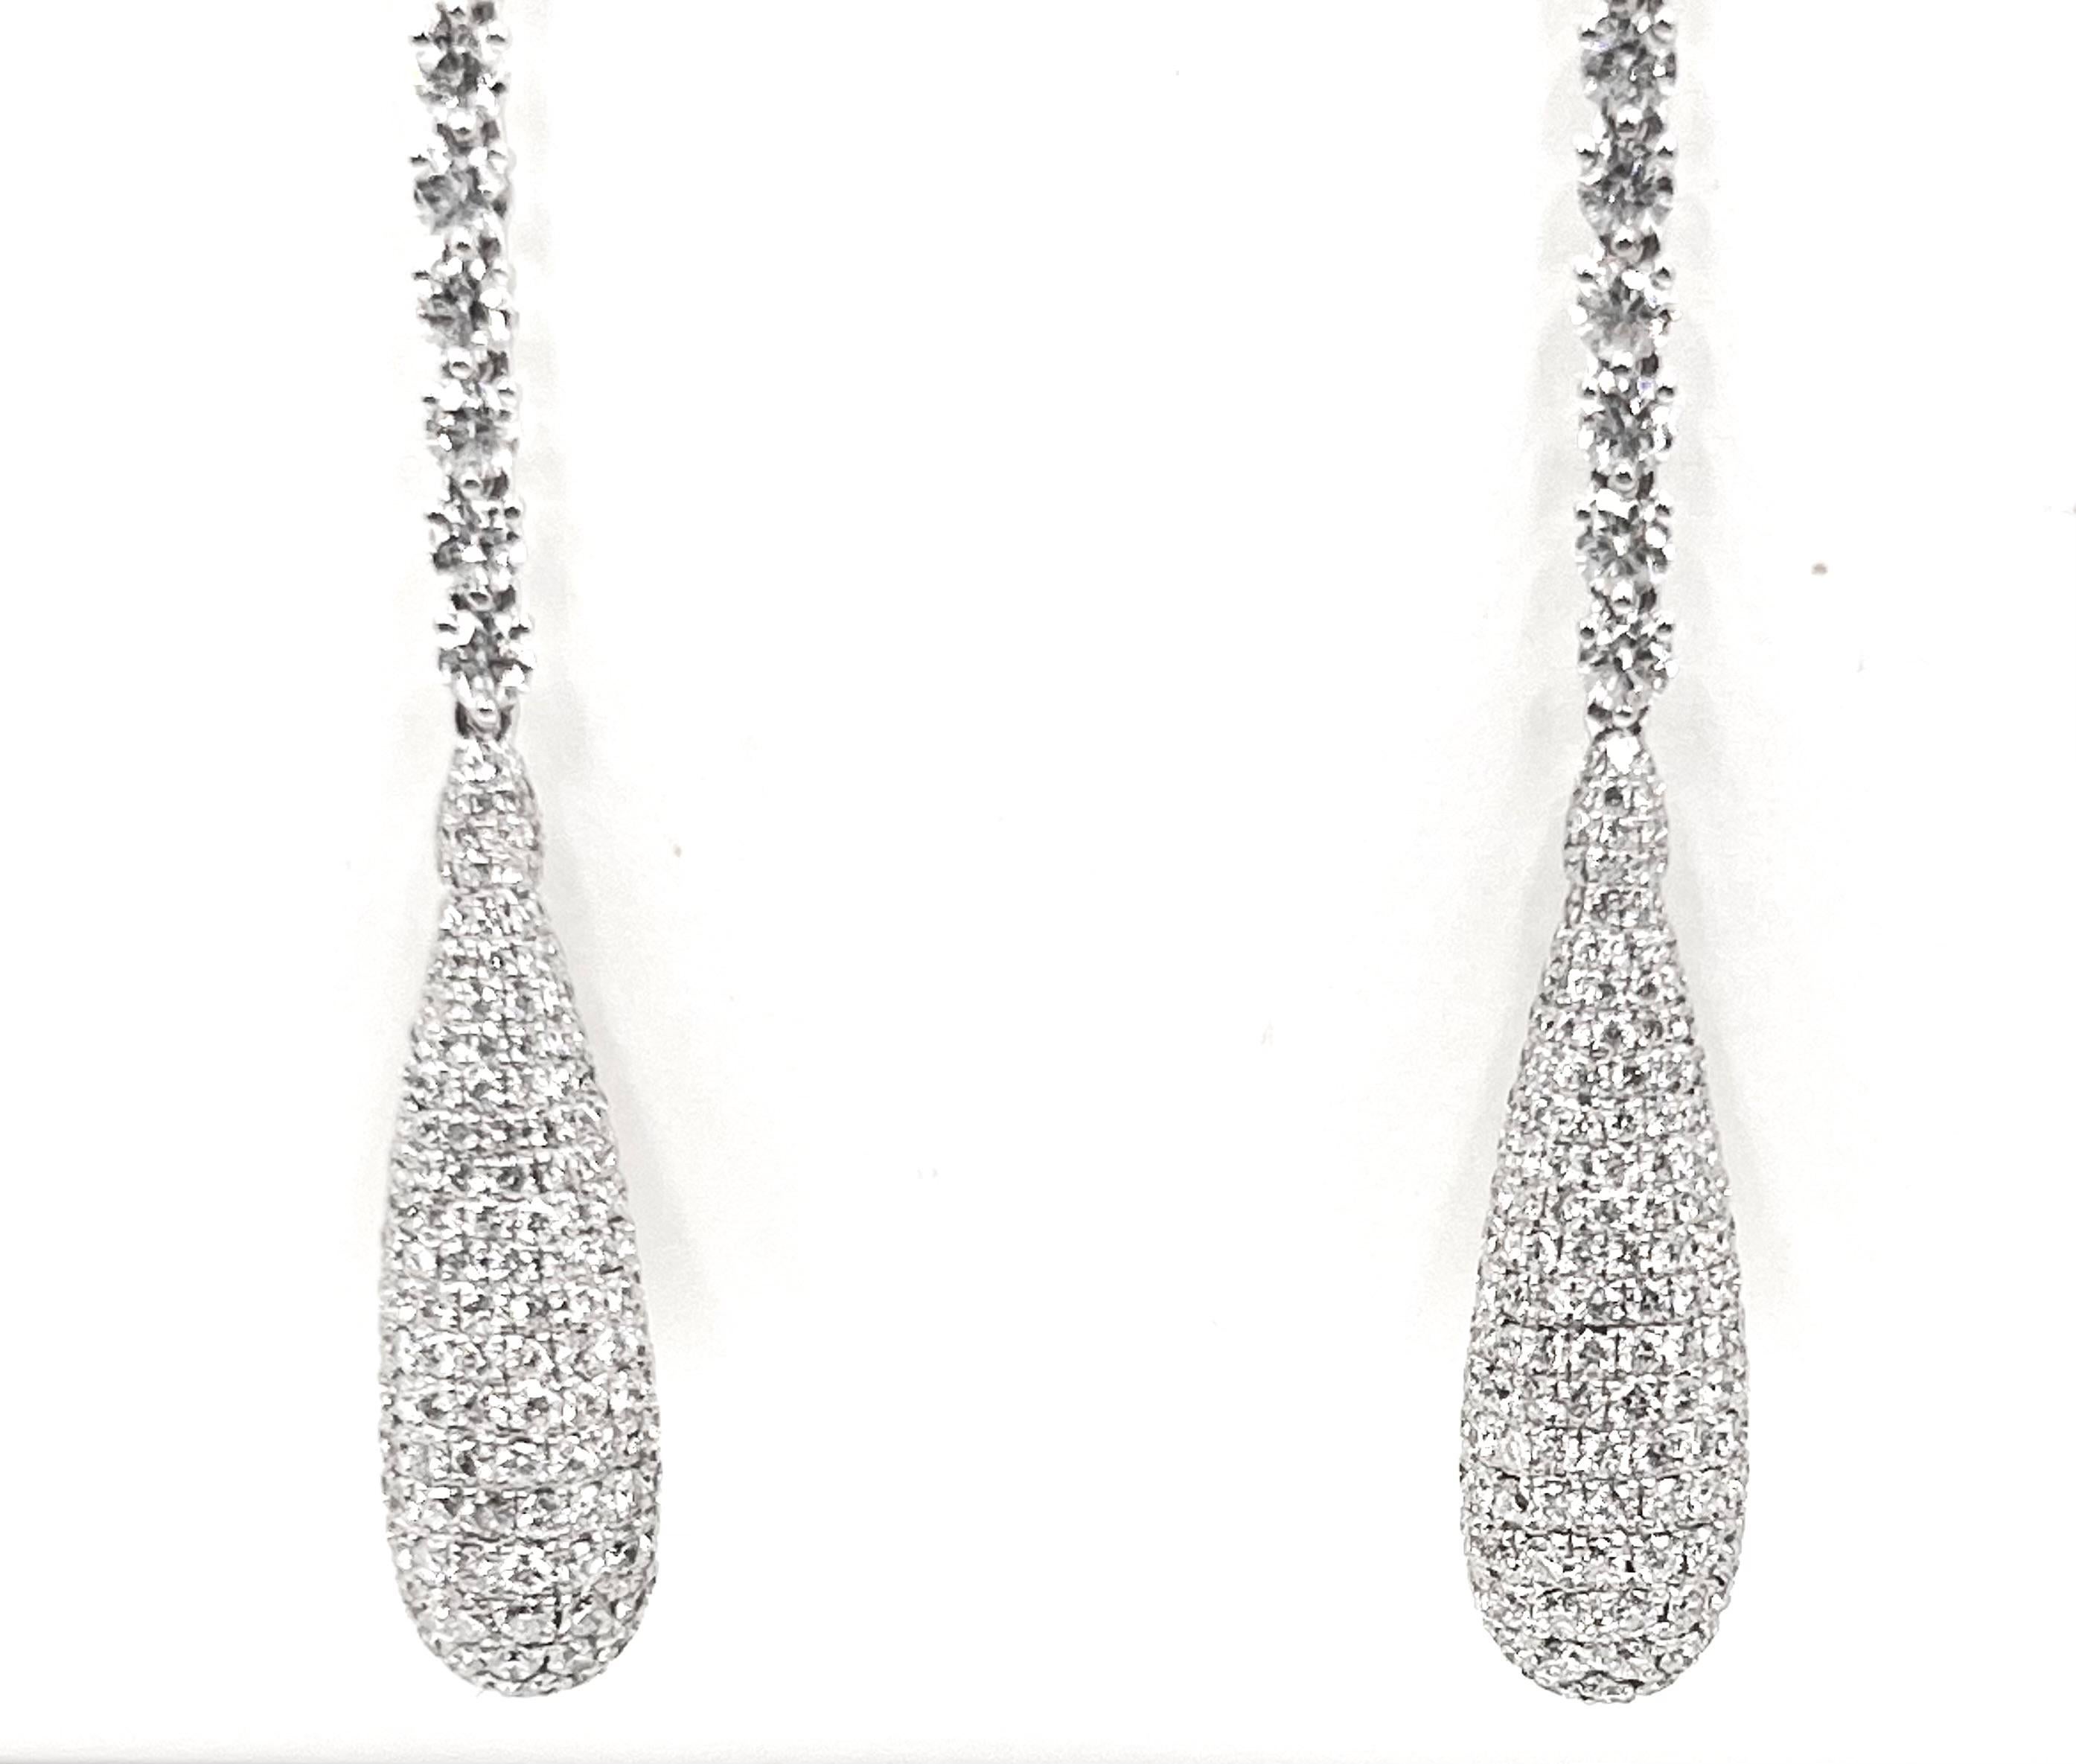 Modern Jacob & Co. 18k White Gold Diamond Teardrop Earrings